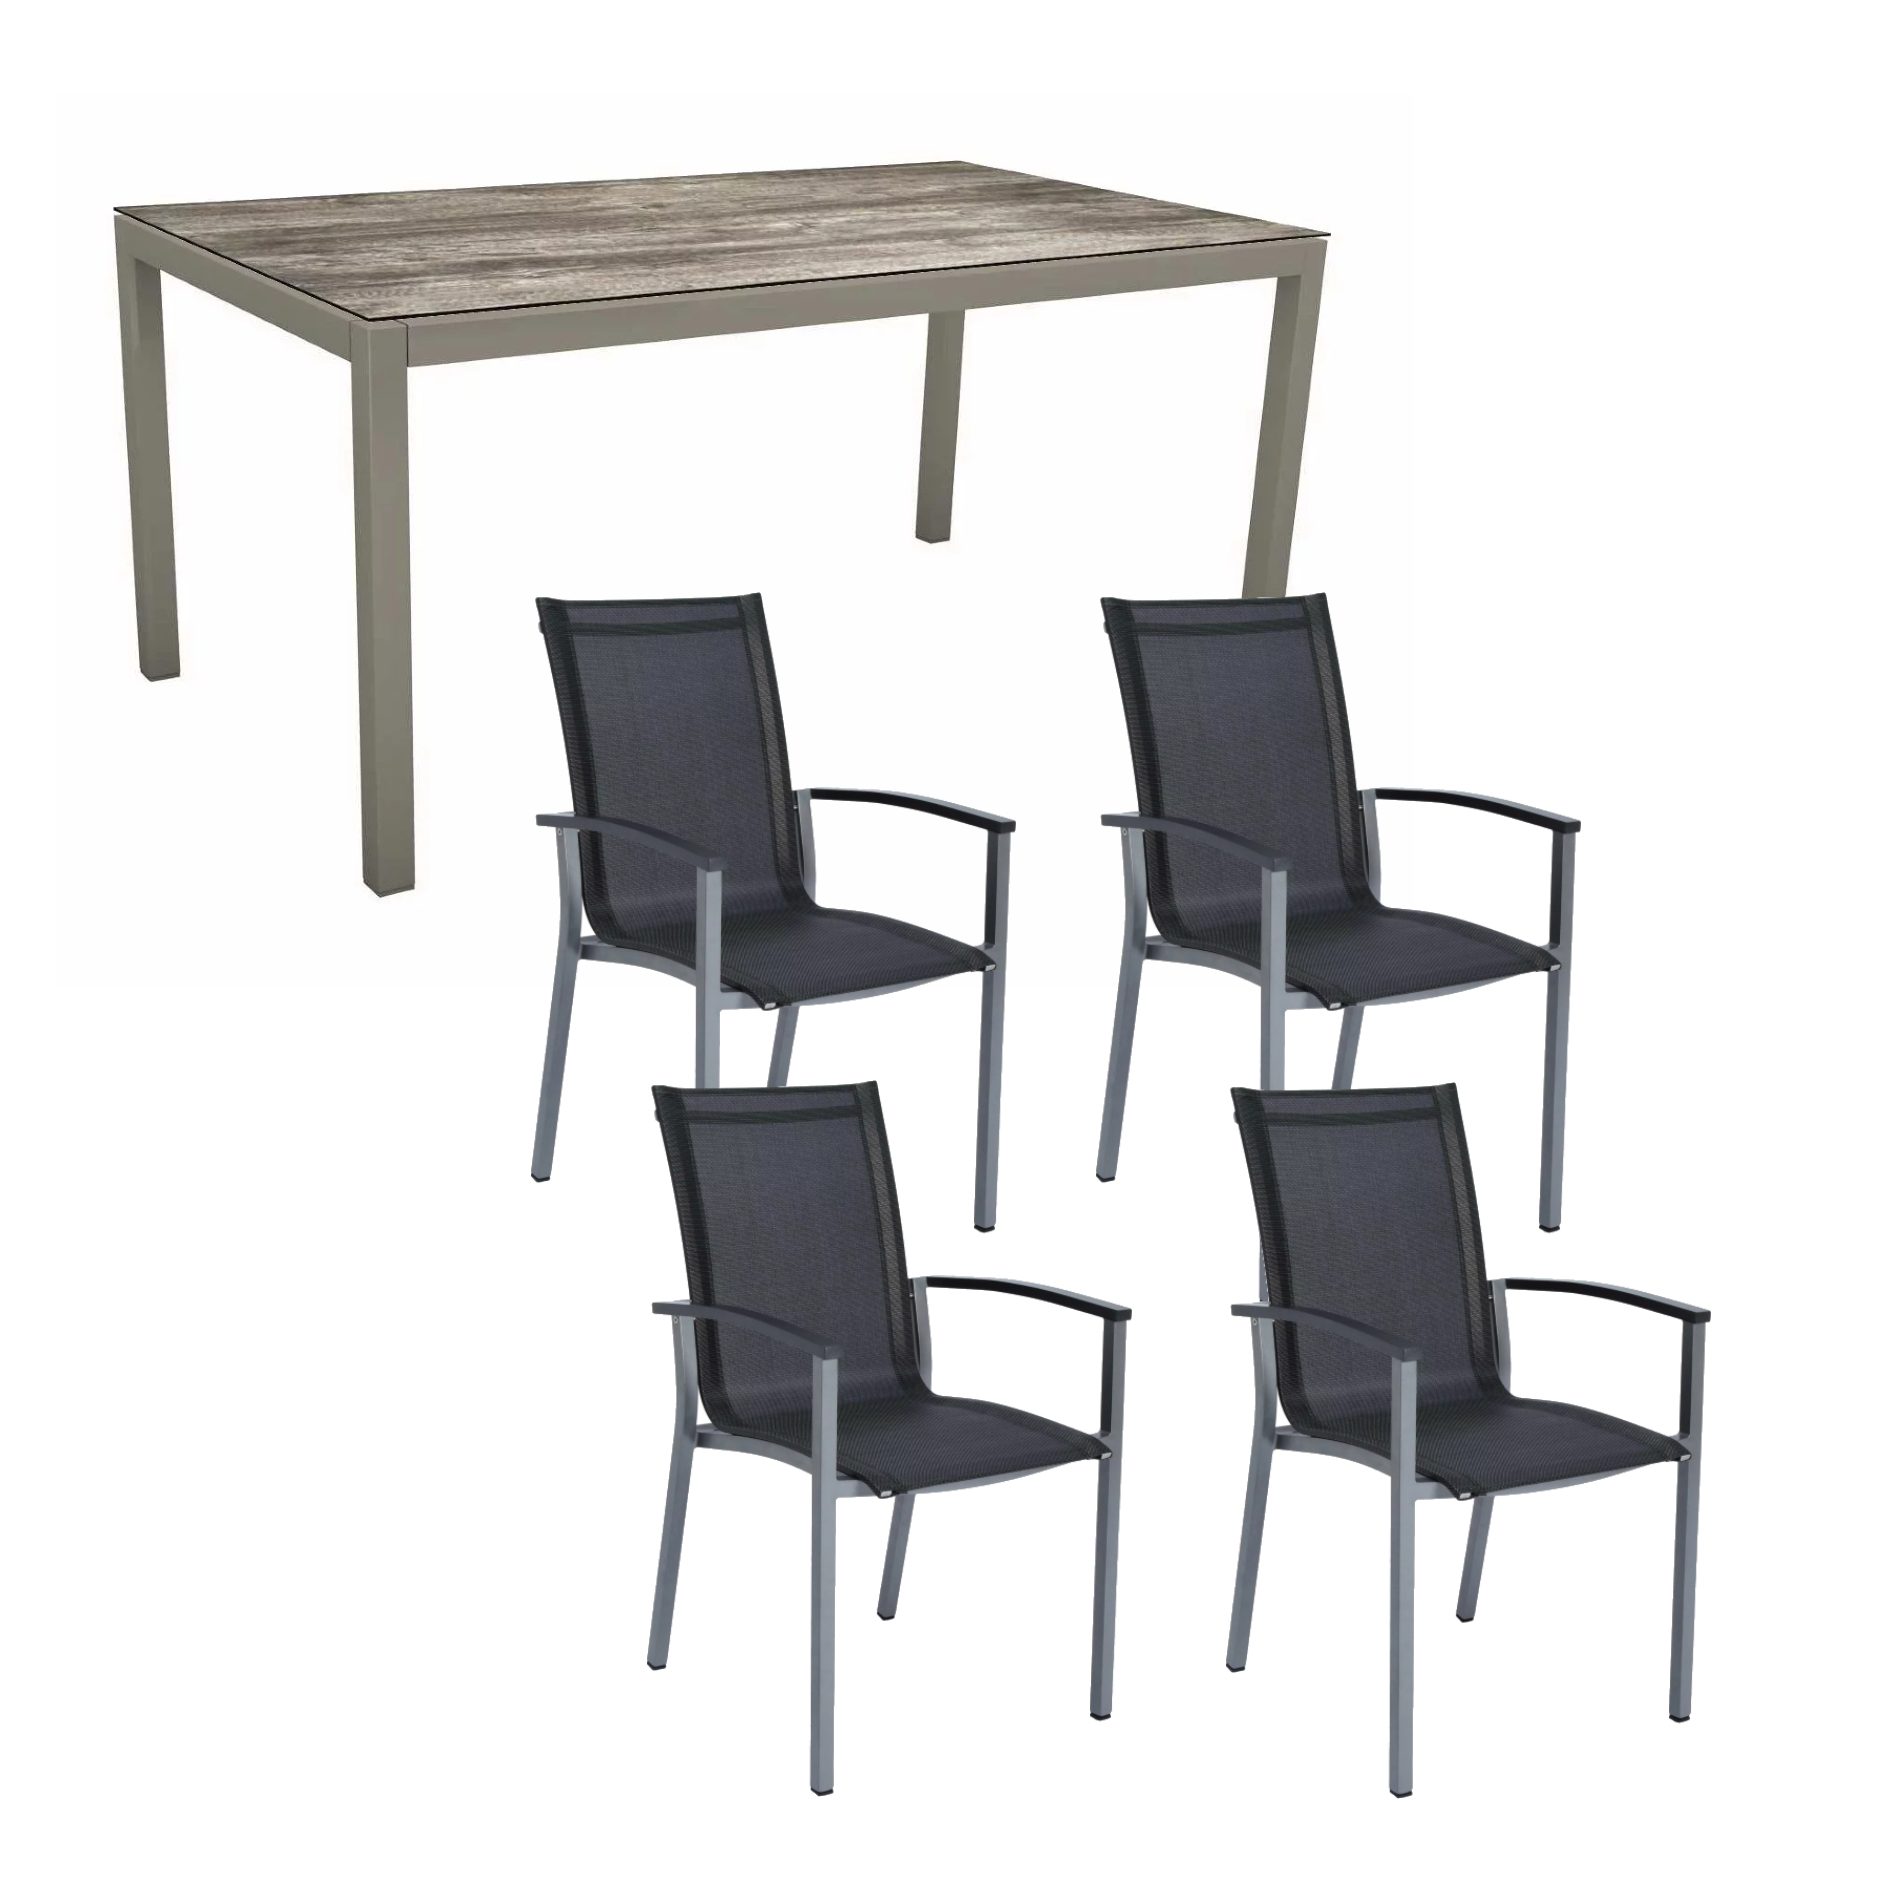 Stern Gartenmöbel-Set "Evoee", Gestelle Aluminium graphit, Sitzfläche Textilgewebe silbergrau, Tischplatte HPL Tundra Grau